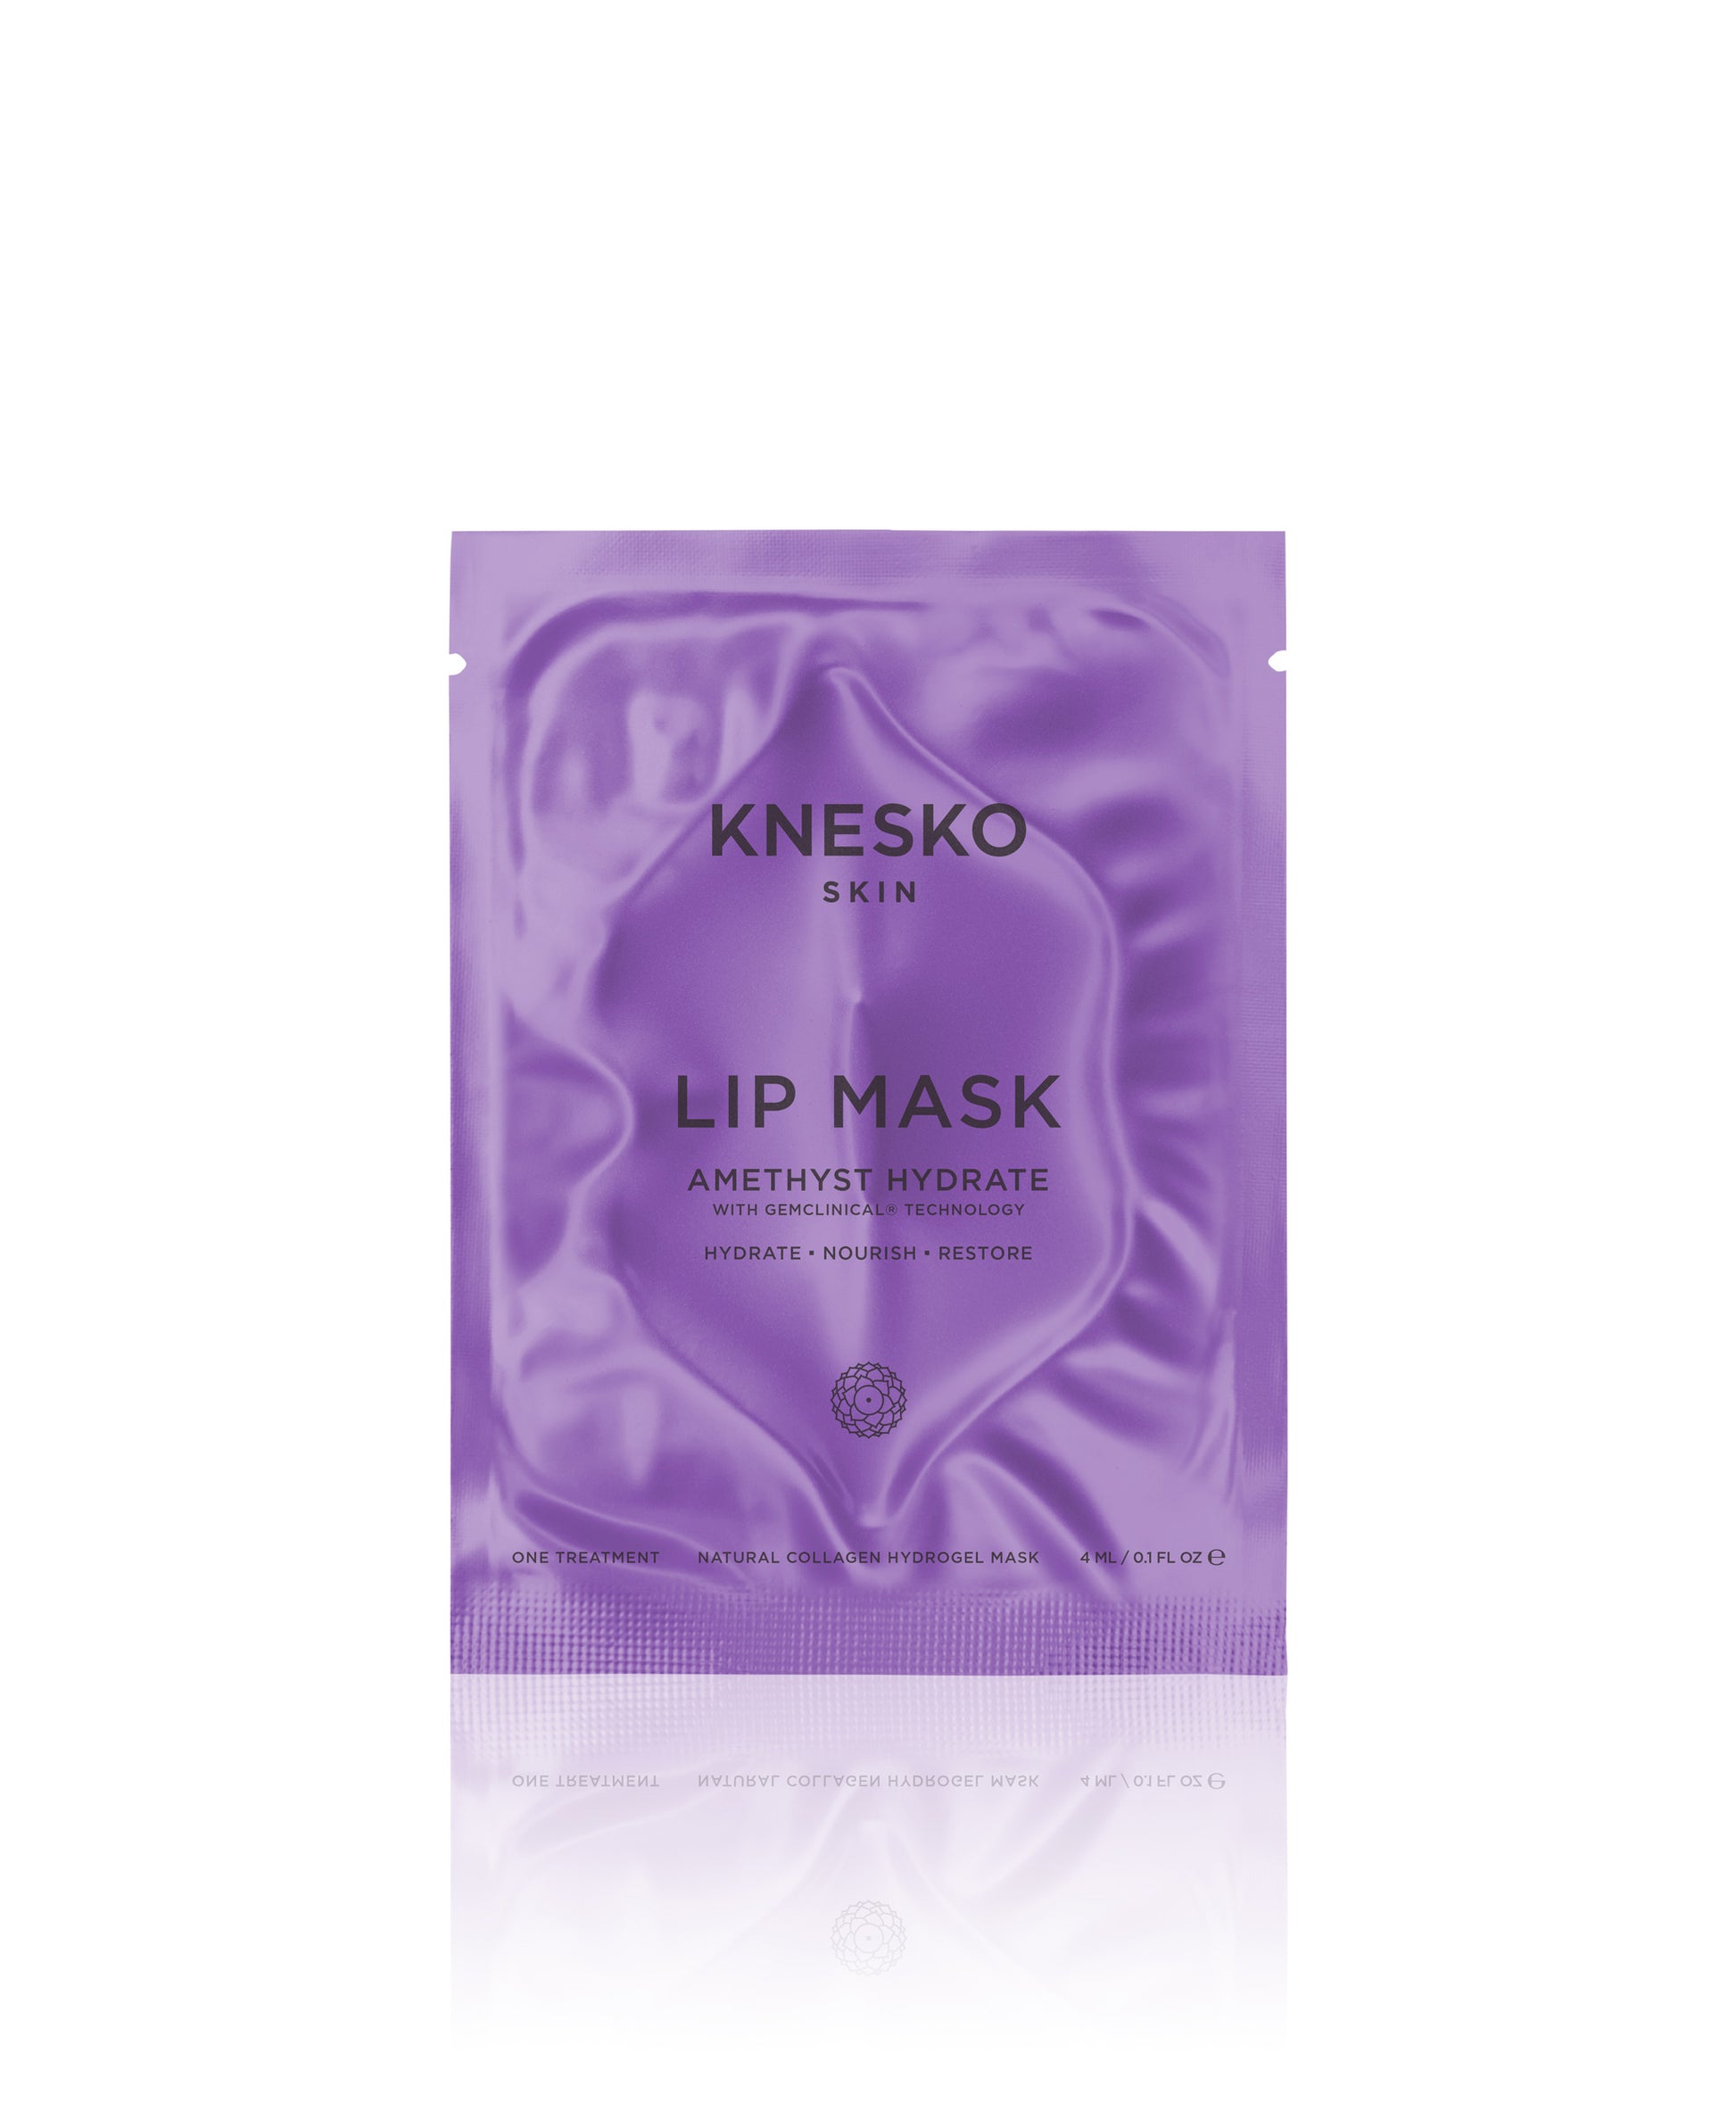 Amethyst Hydrate Lip Mask packaging.